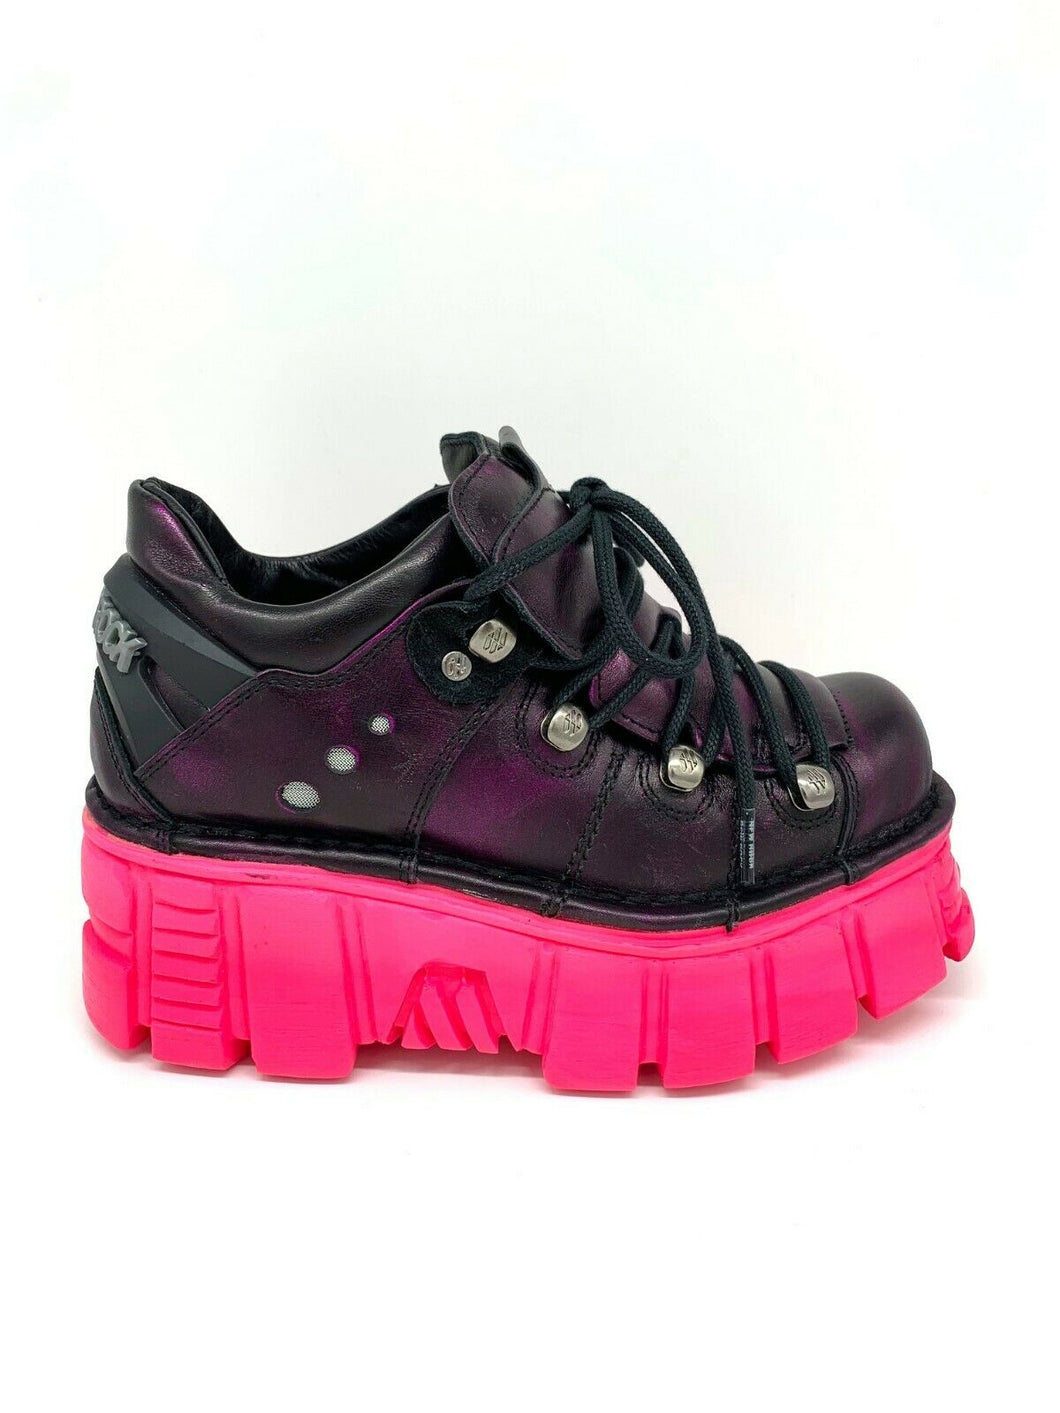 New Rock Shoes Shoes Boots Designer Purple Metallic Platform Fashion Tower Sole